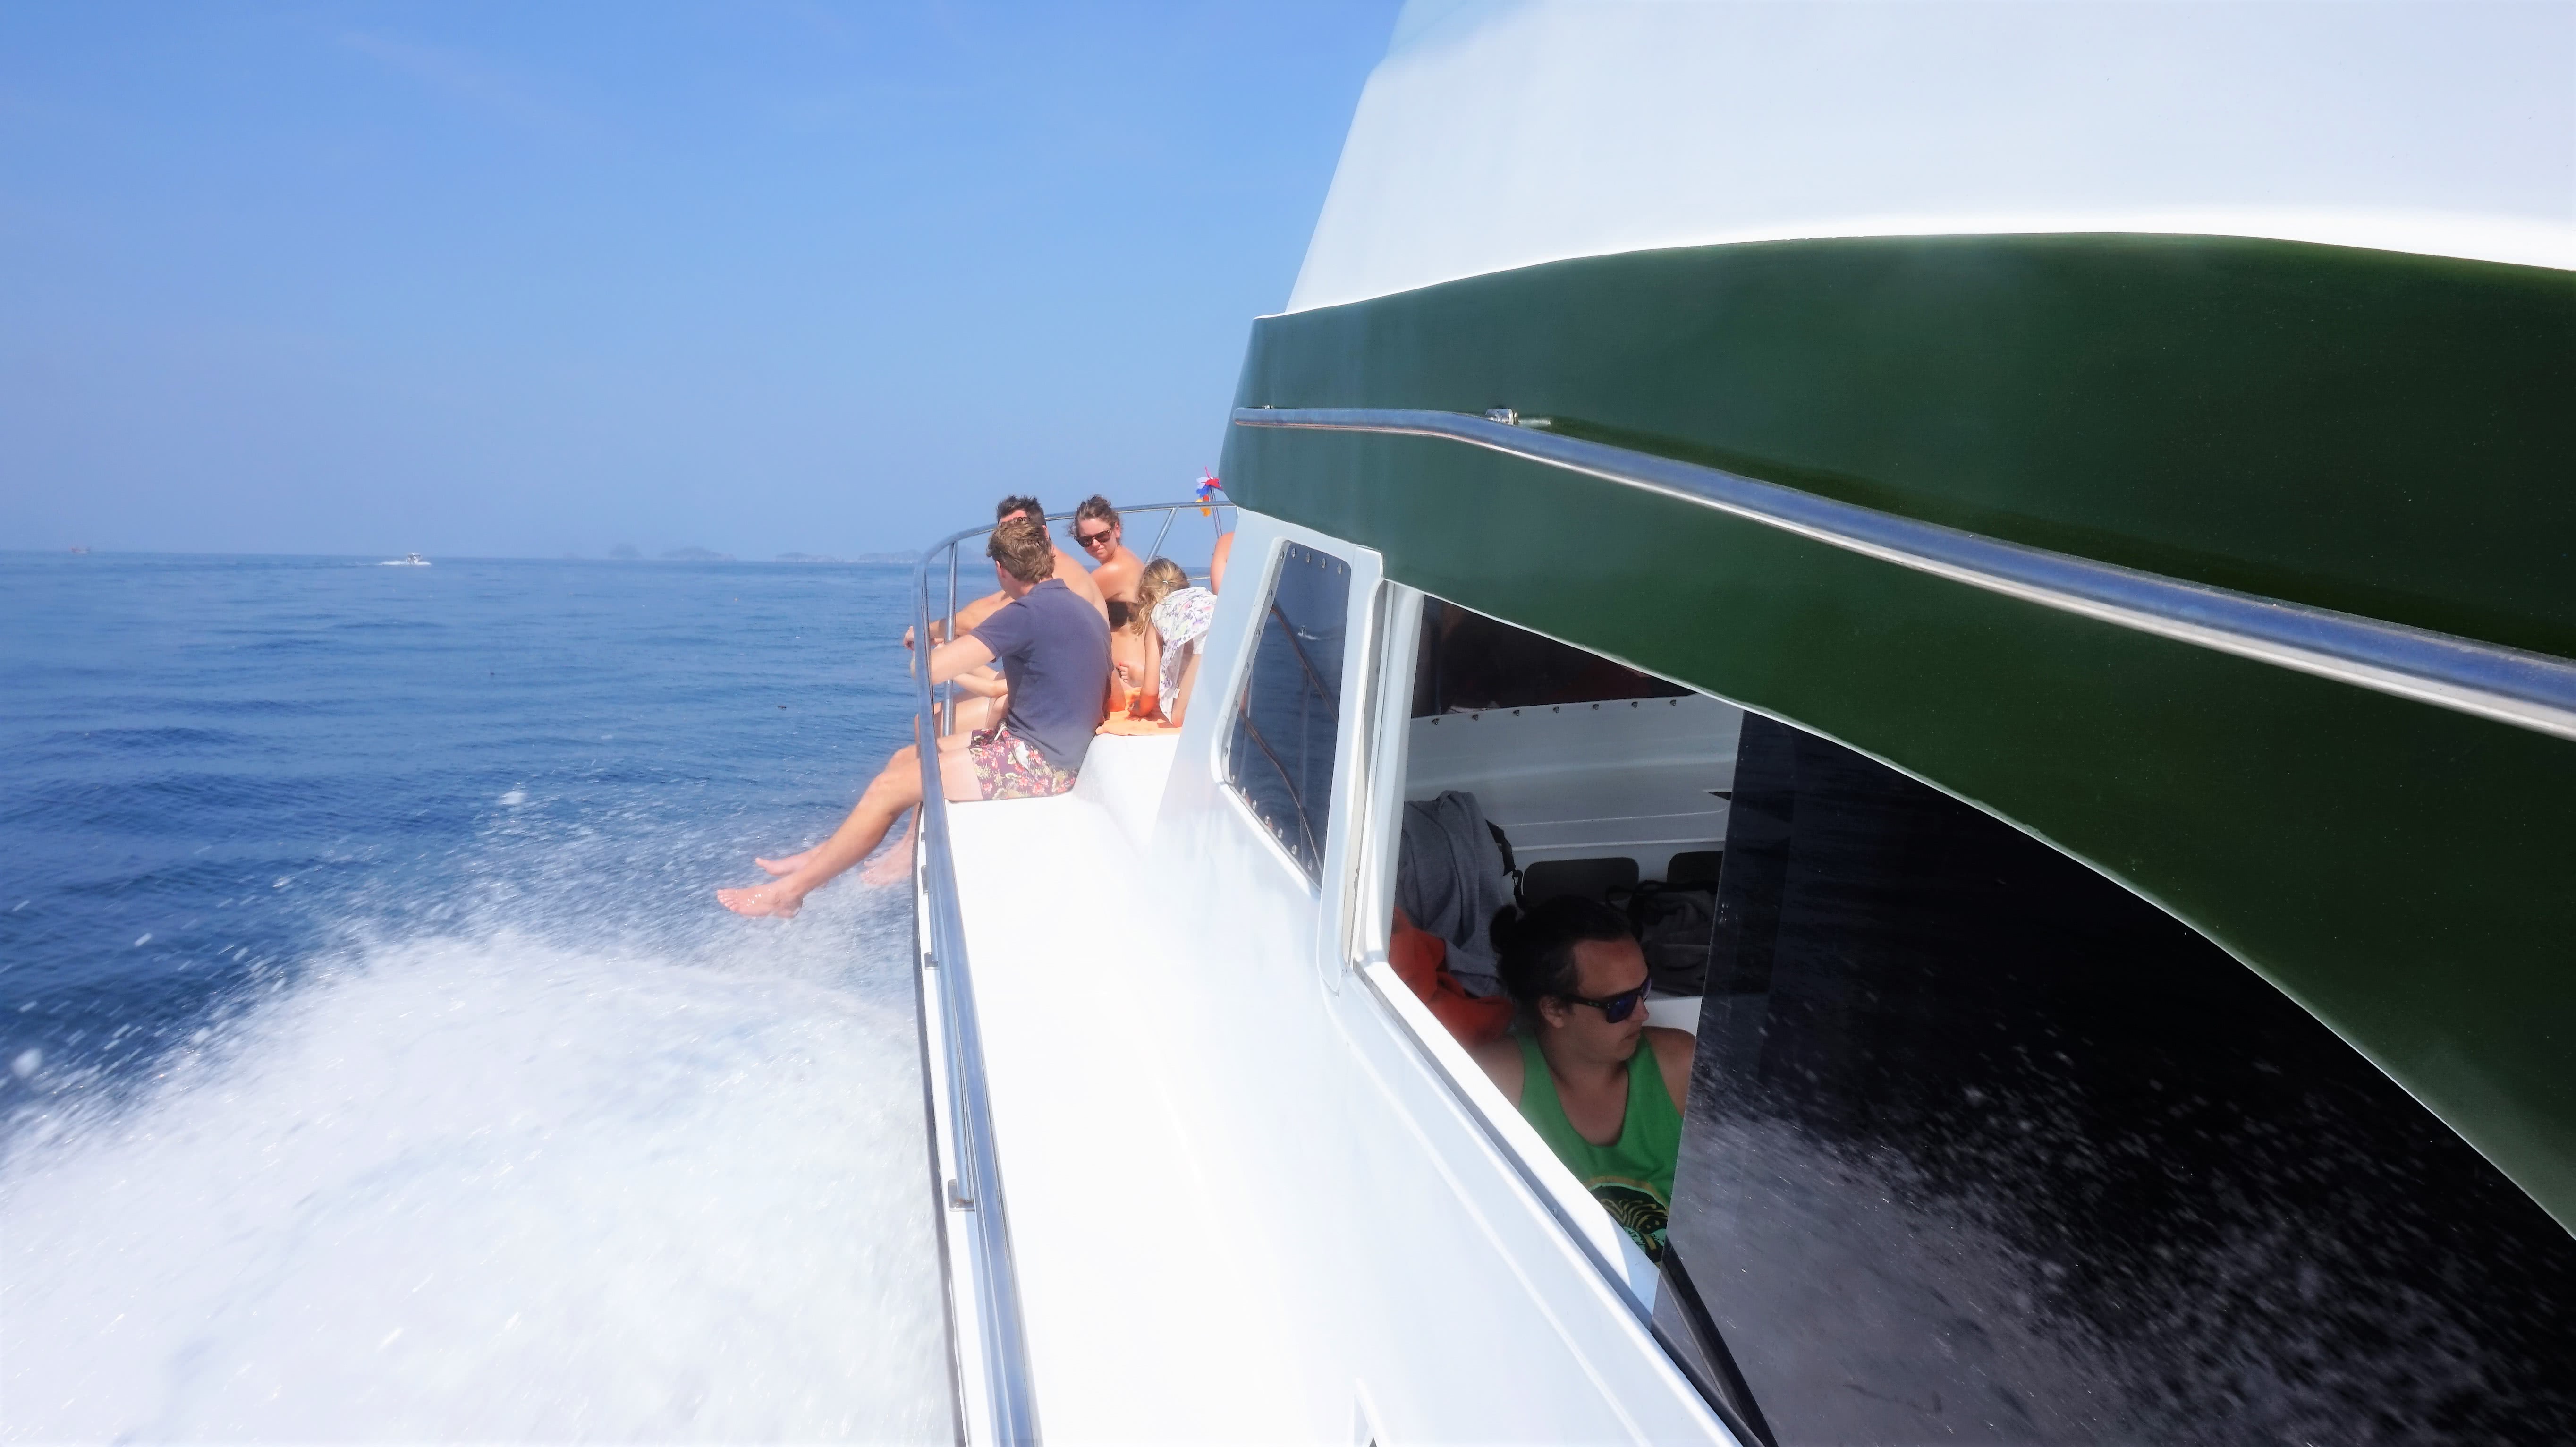 Private cruises by yacht “Sao”, Koh Samui, Thailand